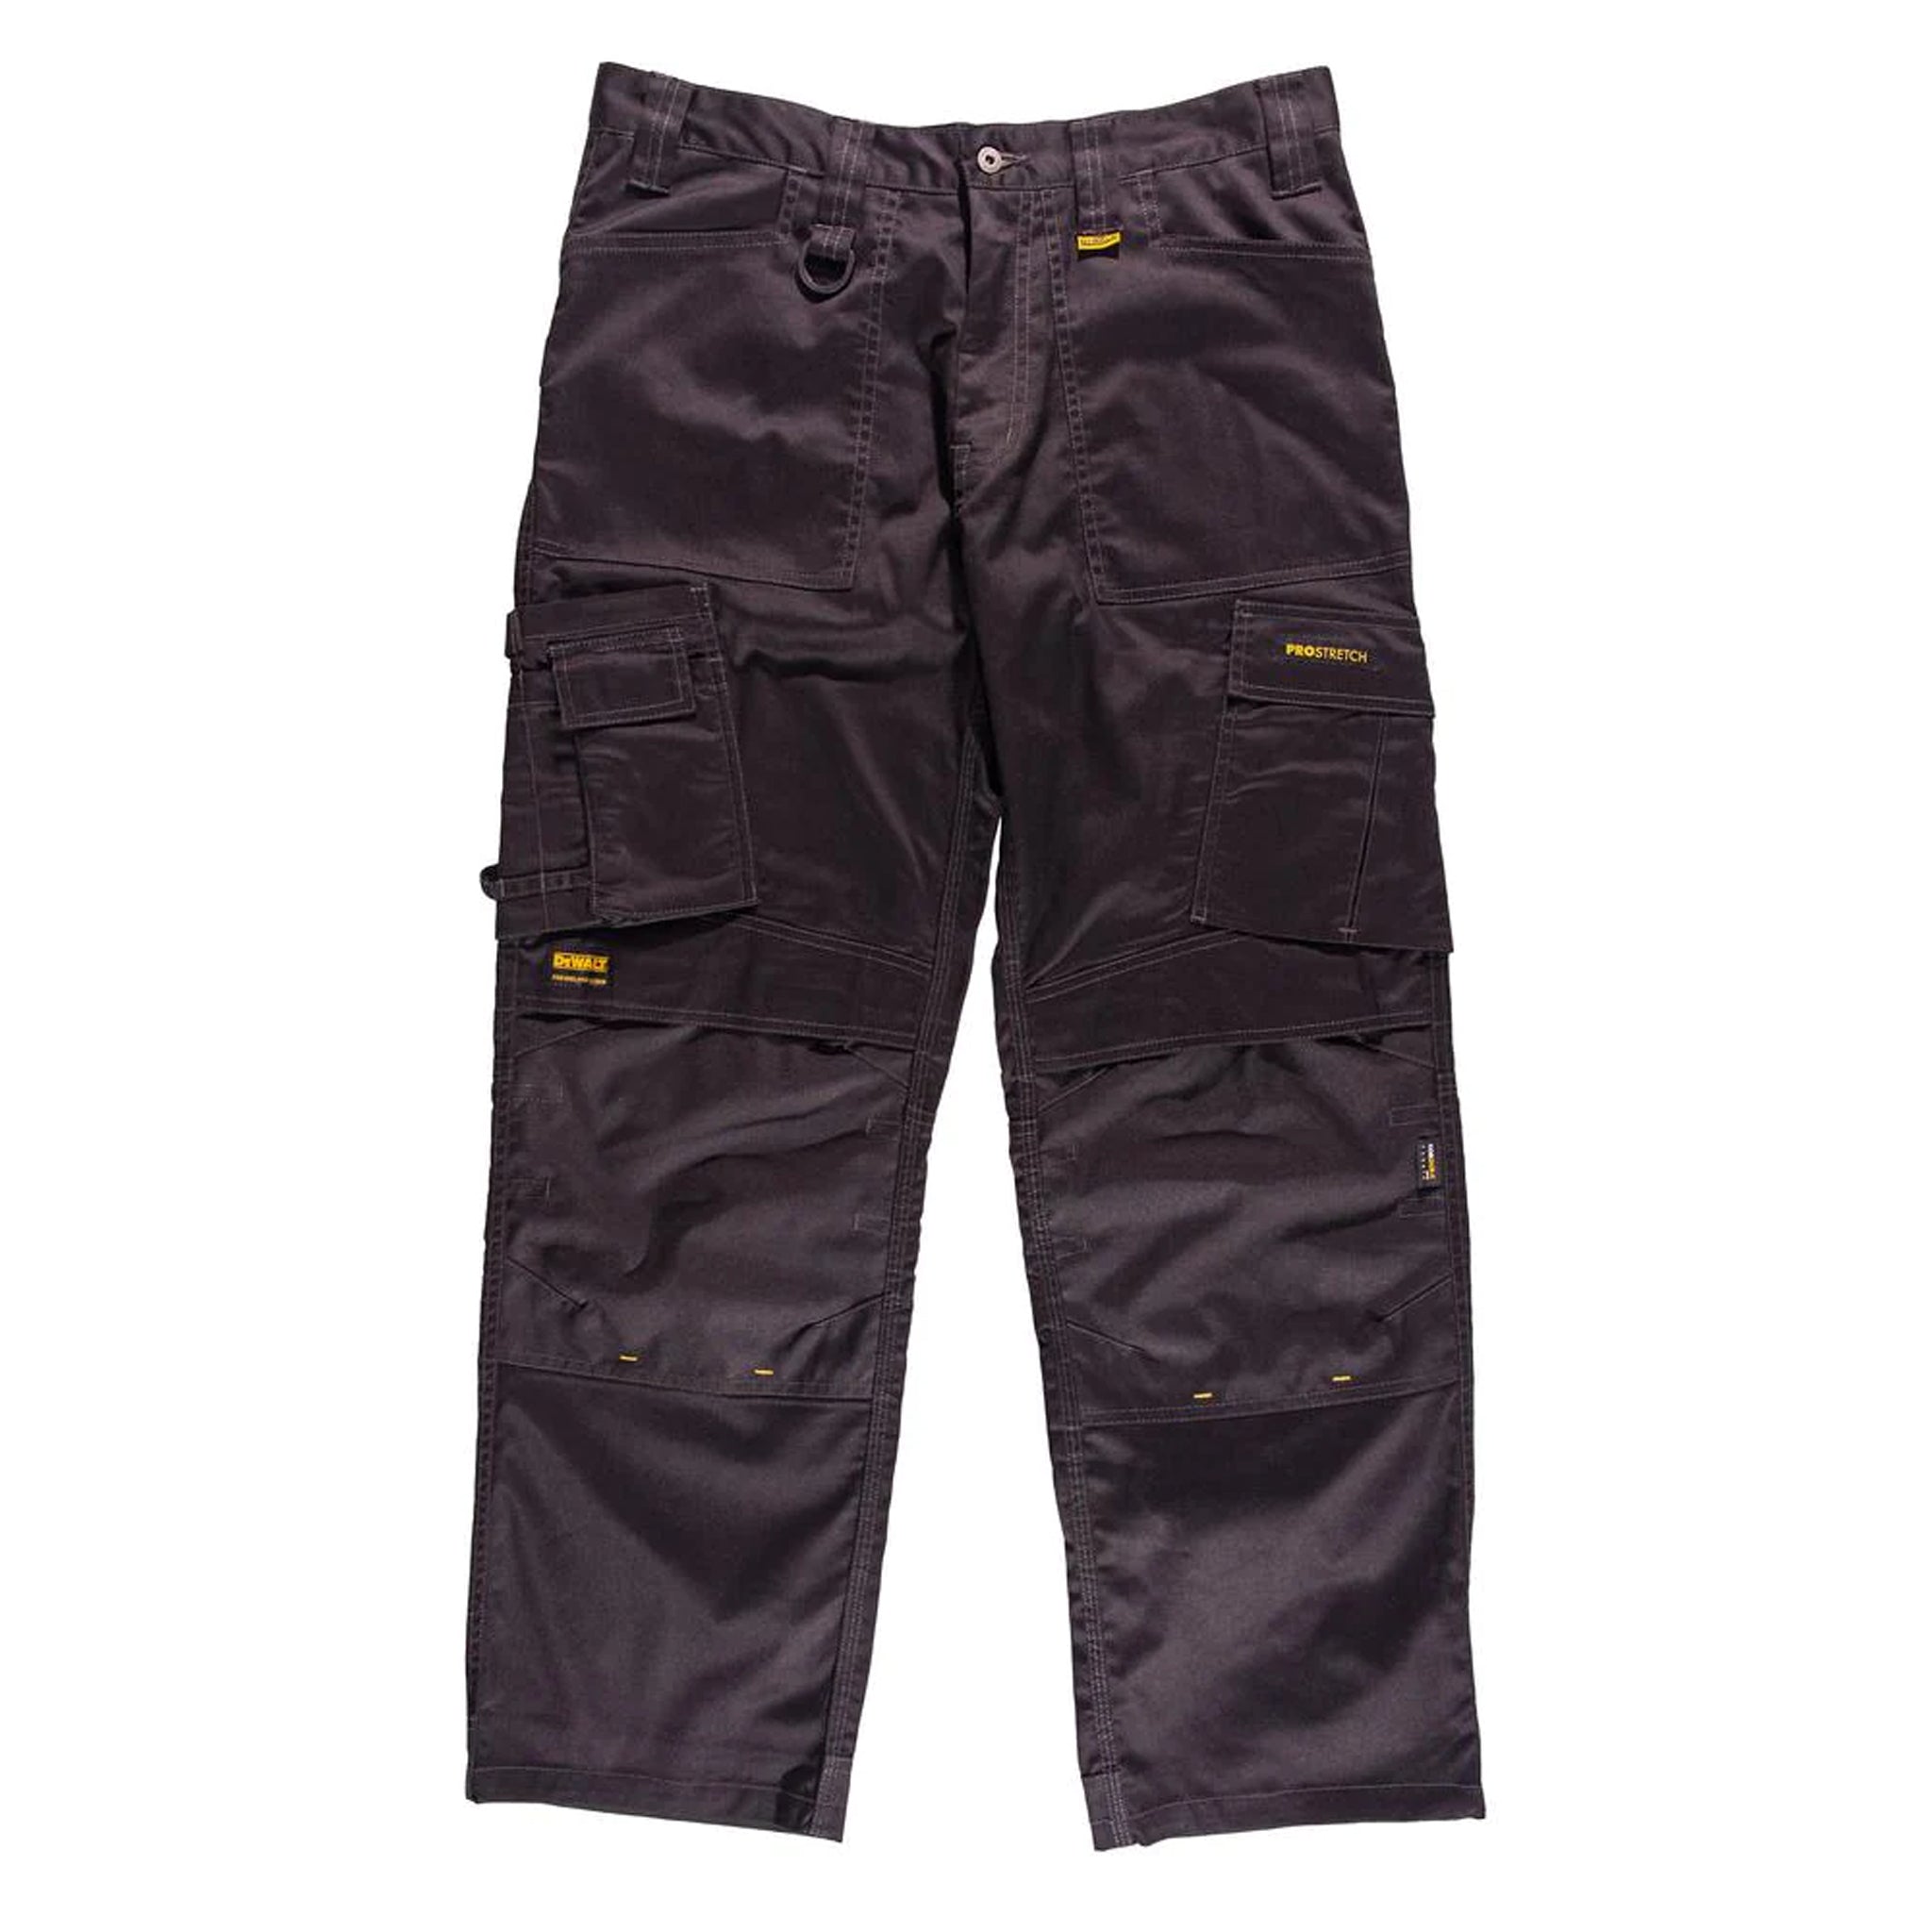 Snickers 6251 Allround Stretch Work Trousers Standard Fit - Short Leg |  Borderland Muff